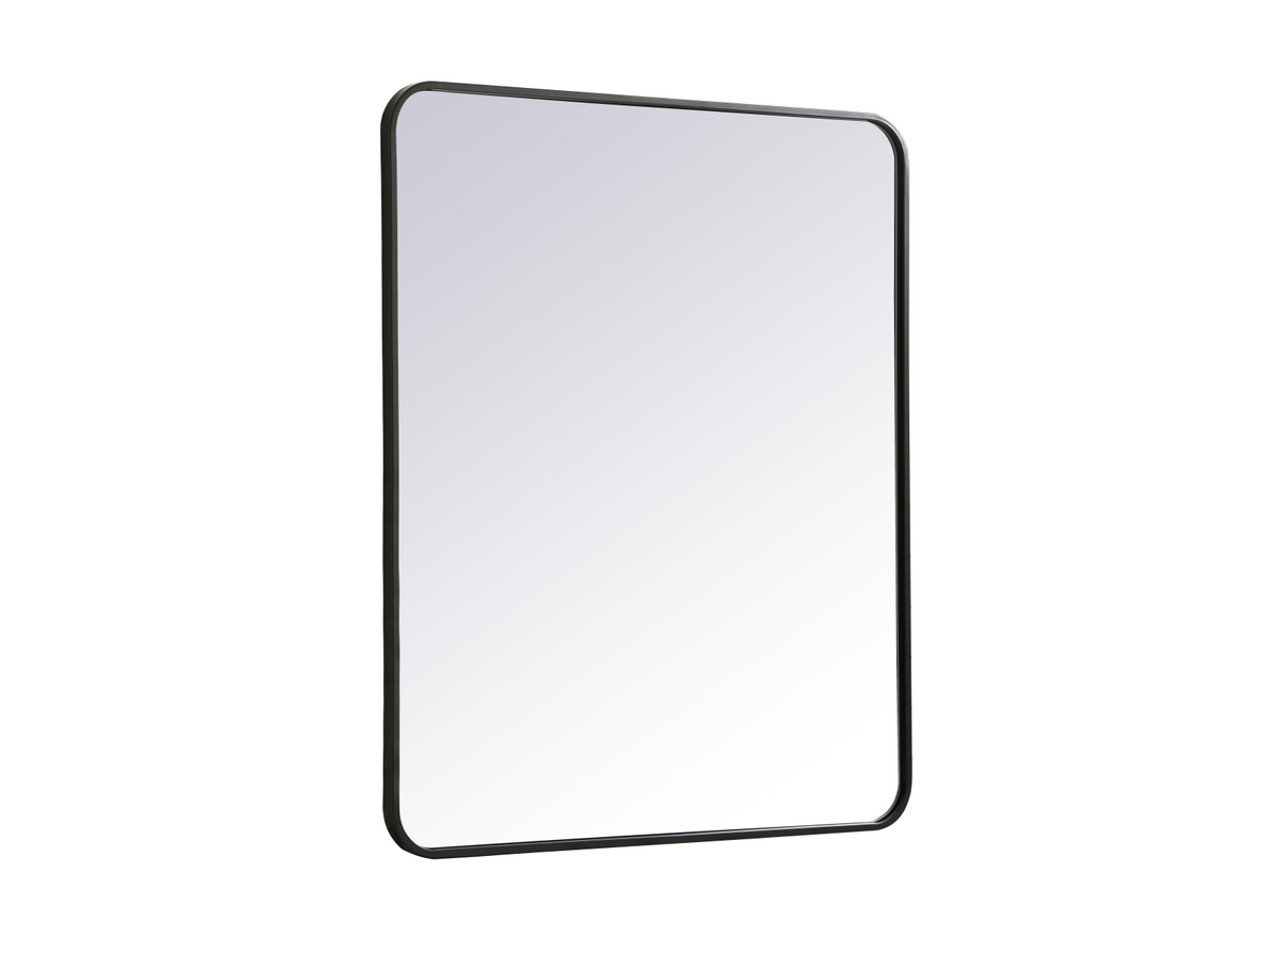 Elegant Decor MR803036BK Soft corner metal rectangular mirror 30x36 inch in Black